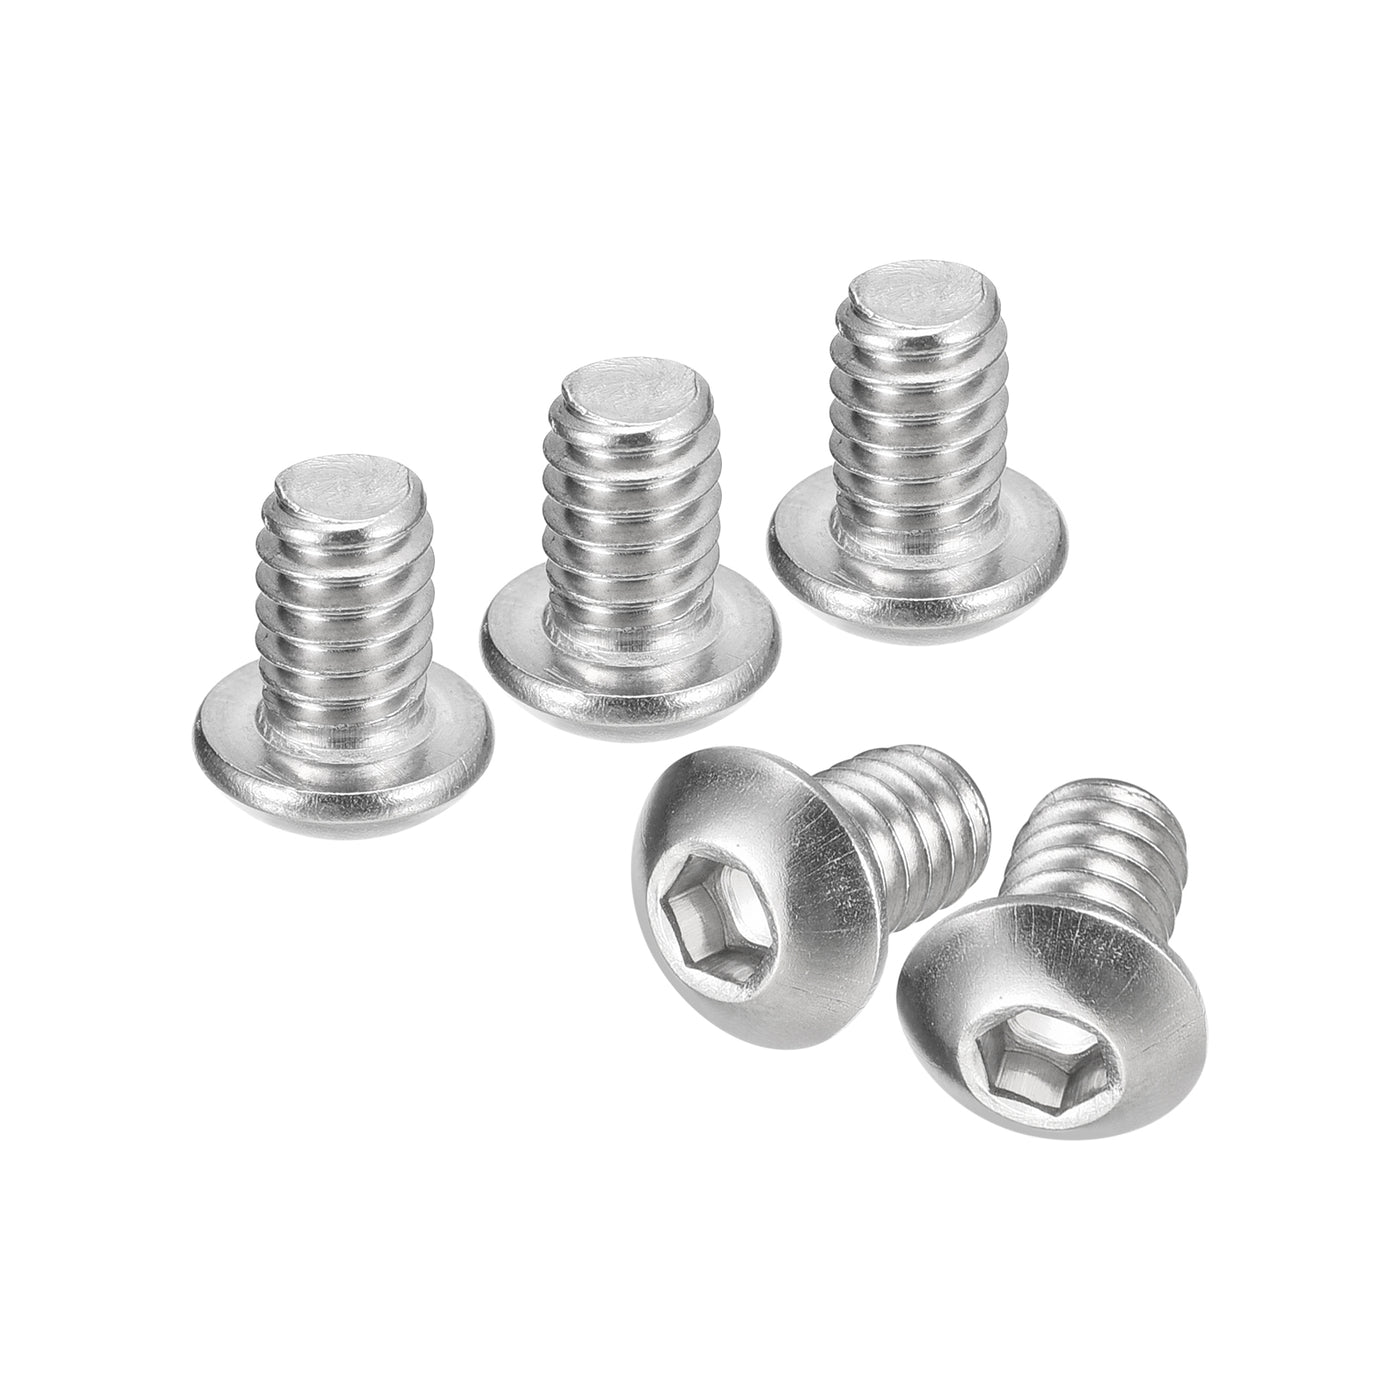 uxcell Uxcell 1/4-20x3/8" Button Head Socket Cap Screws, 25pcs 304 Stainless Steel Screws